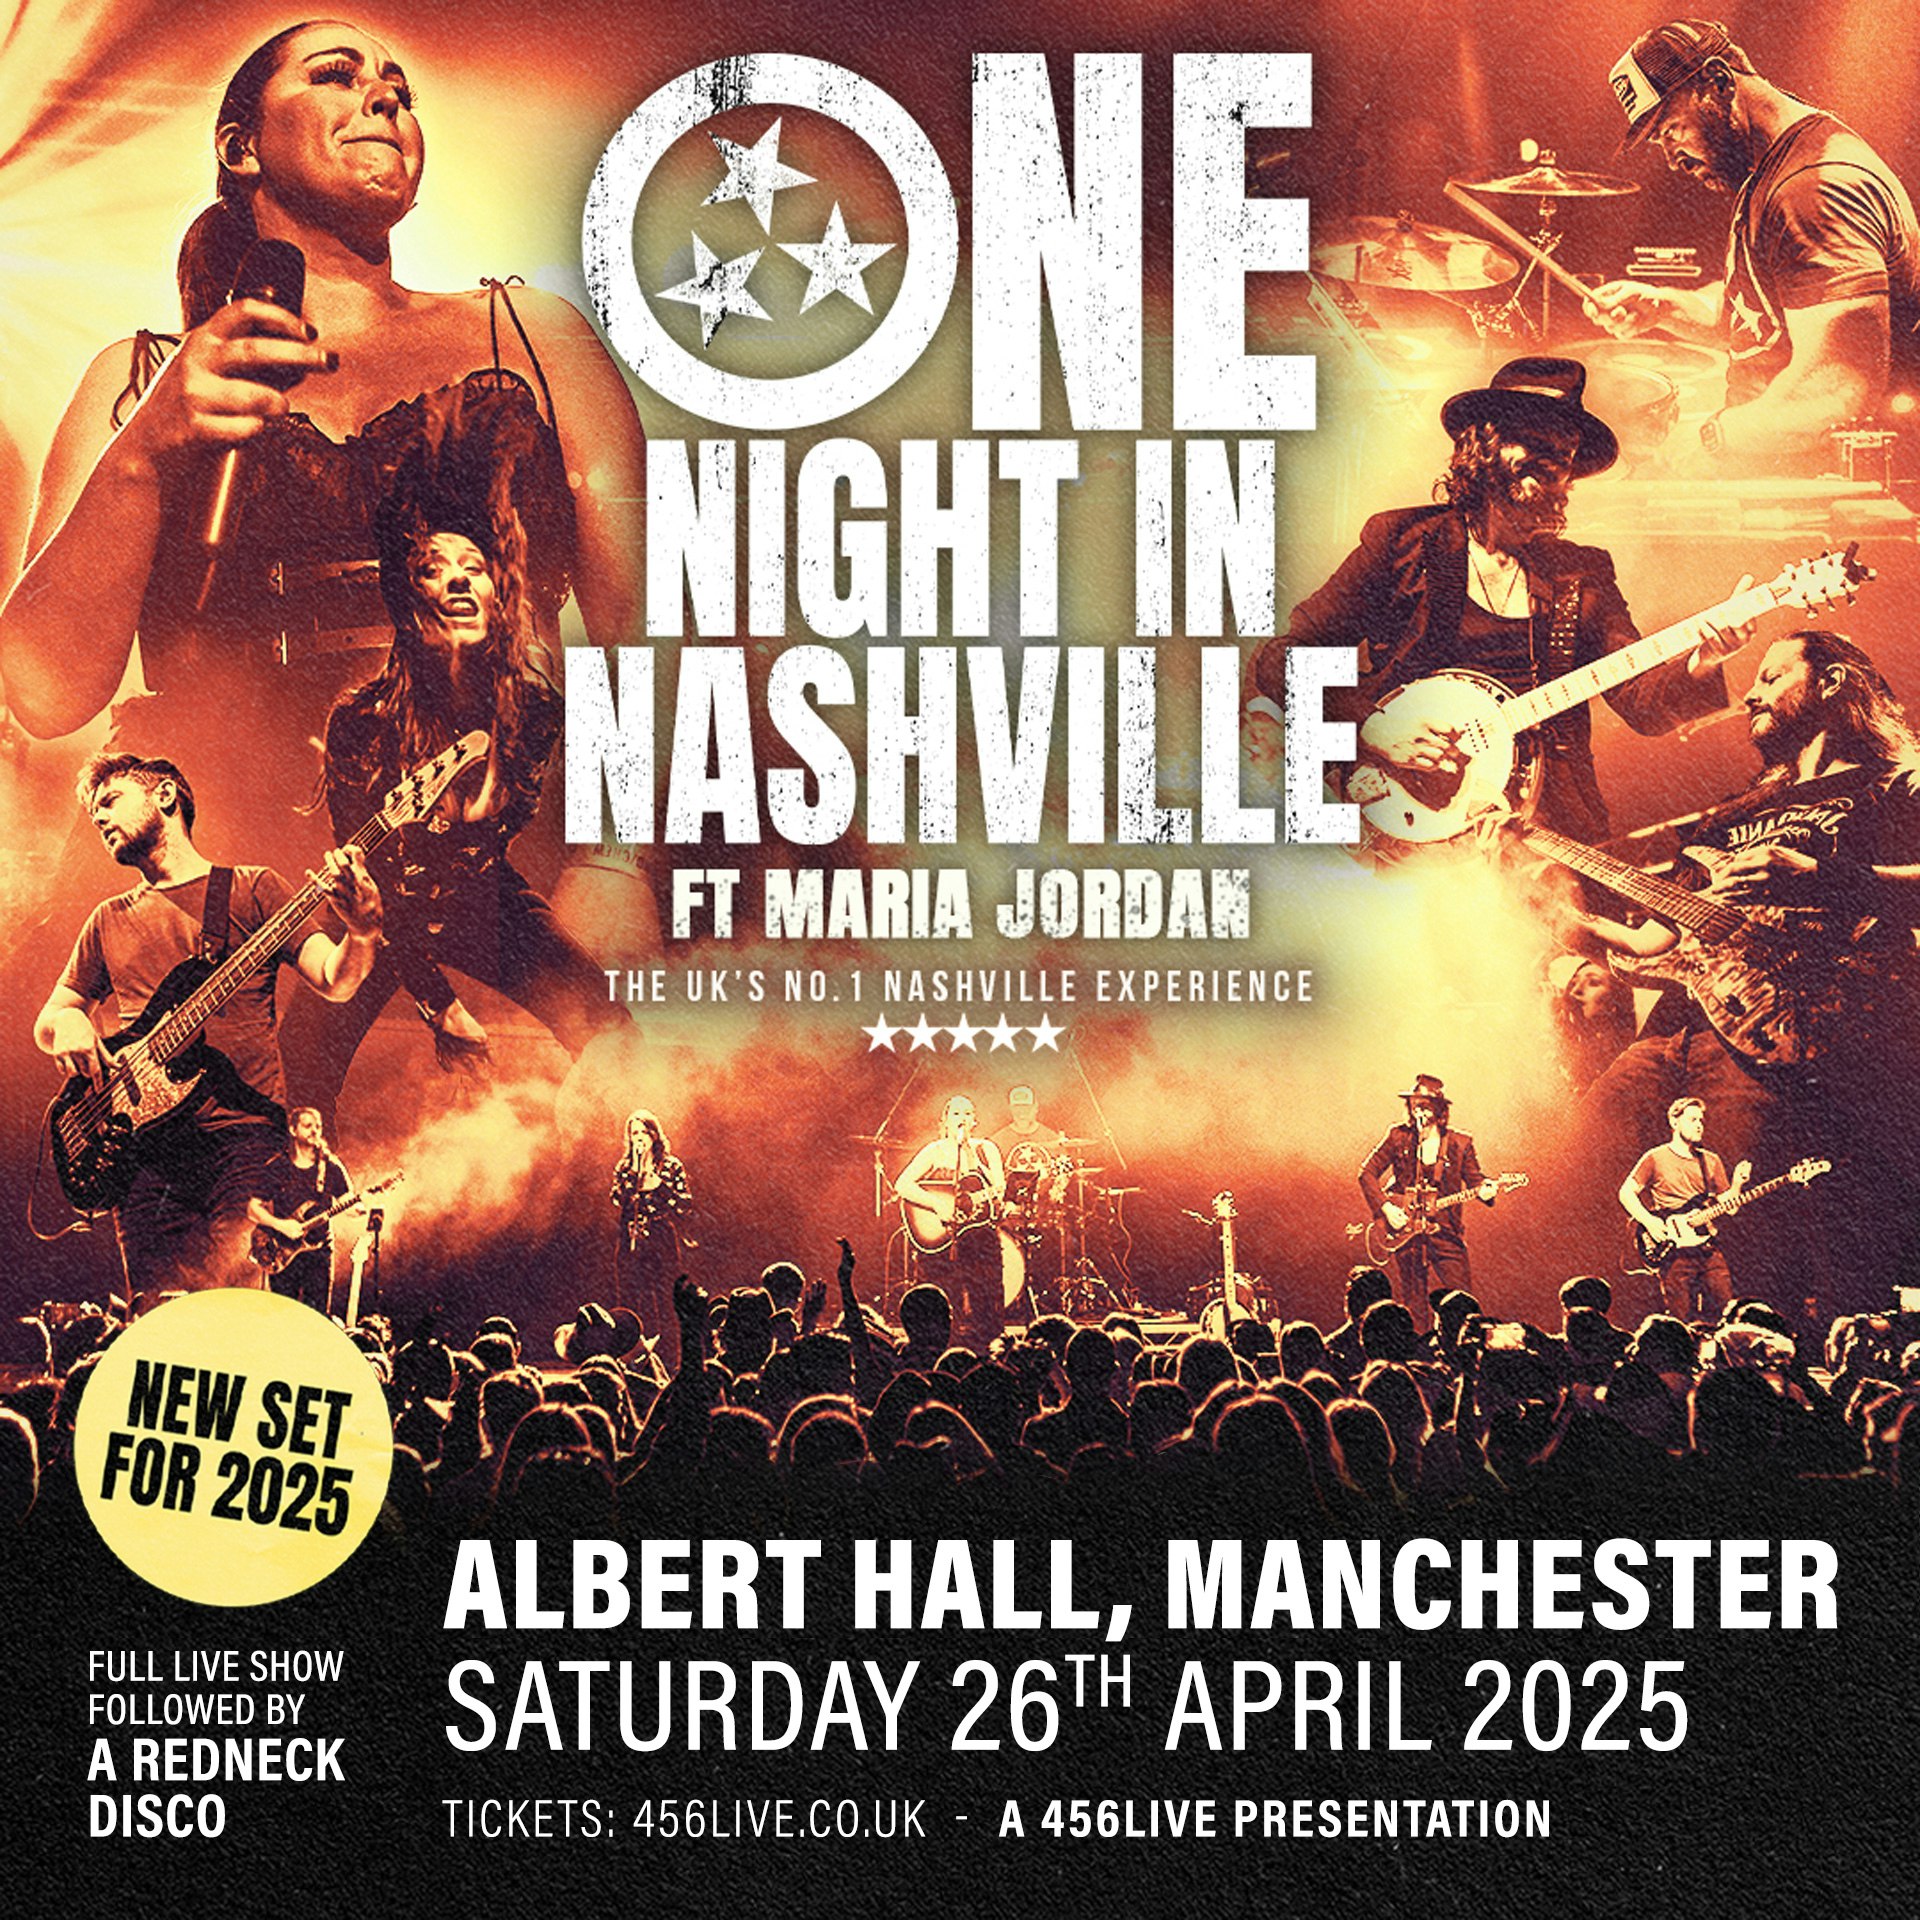 One Night In Nashville | Manchester